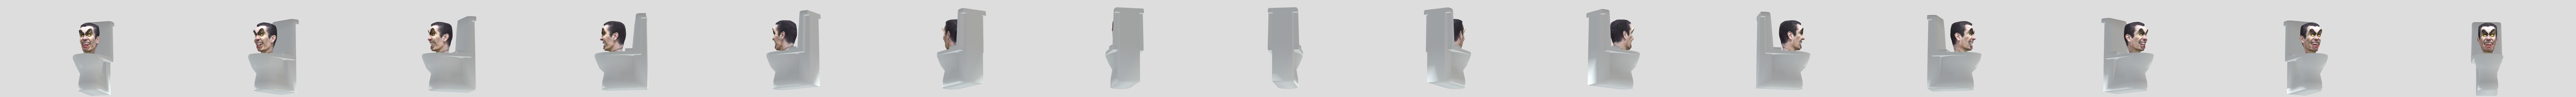 gman toilet 3.0 (skibiditoilet) - 3D model by ppamm2 (@ppammppamm) [4128ce3]